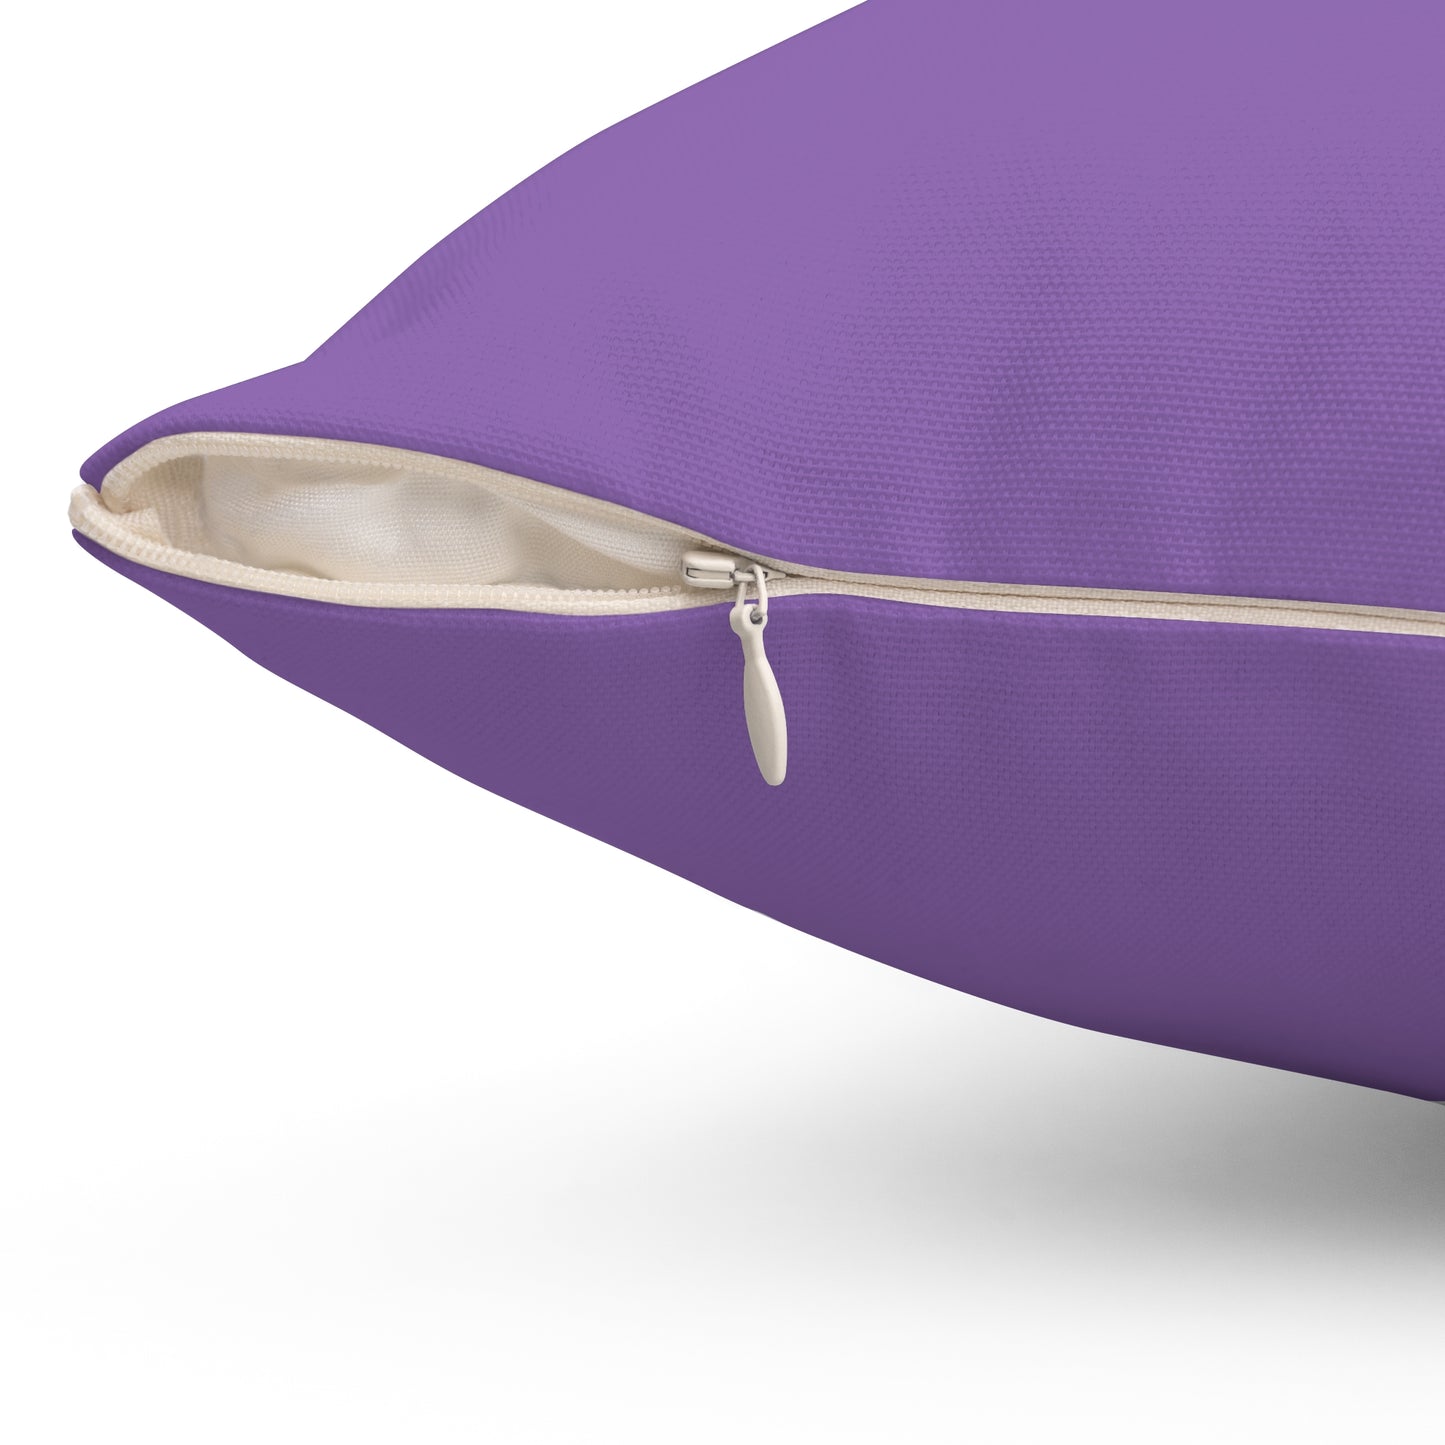 Influencer Engagement Square Pillow - Purple